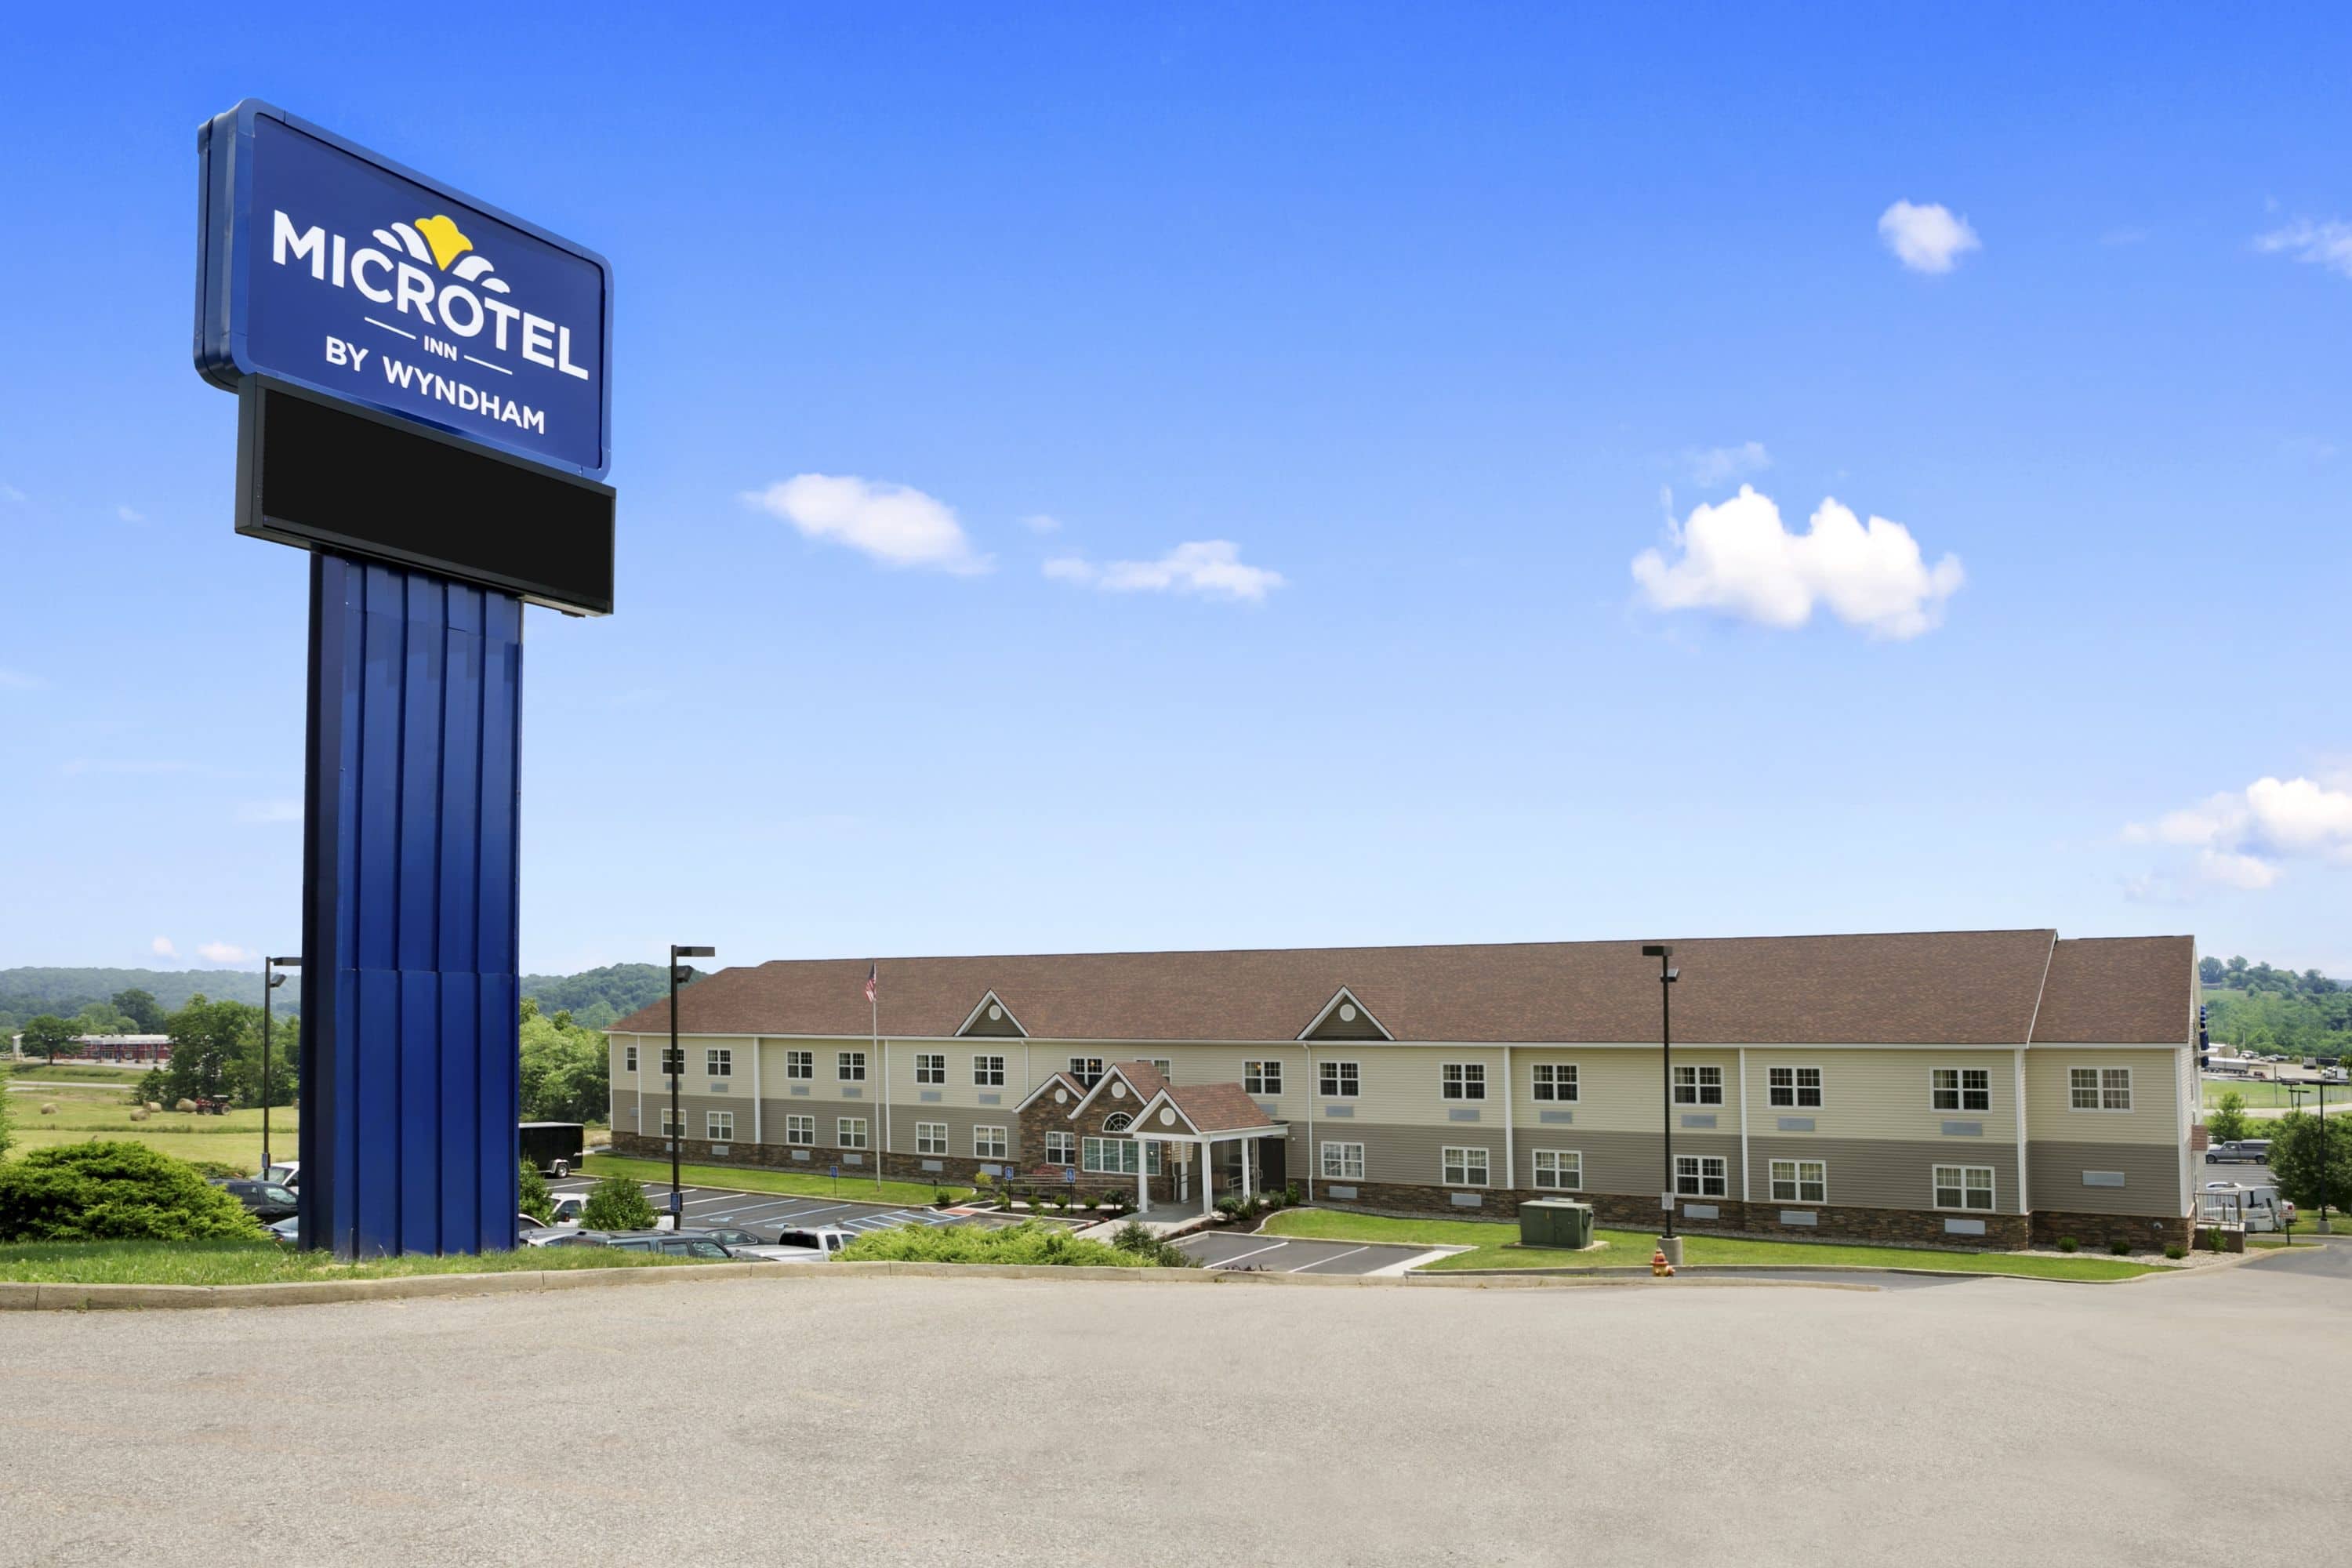 microtel inn & suites by wyndham salt lake city airport salt lake city ut 84116